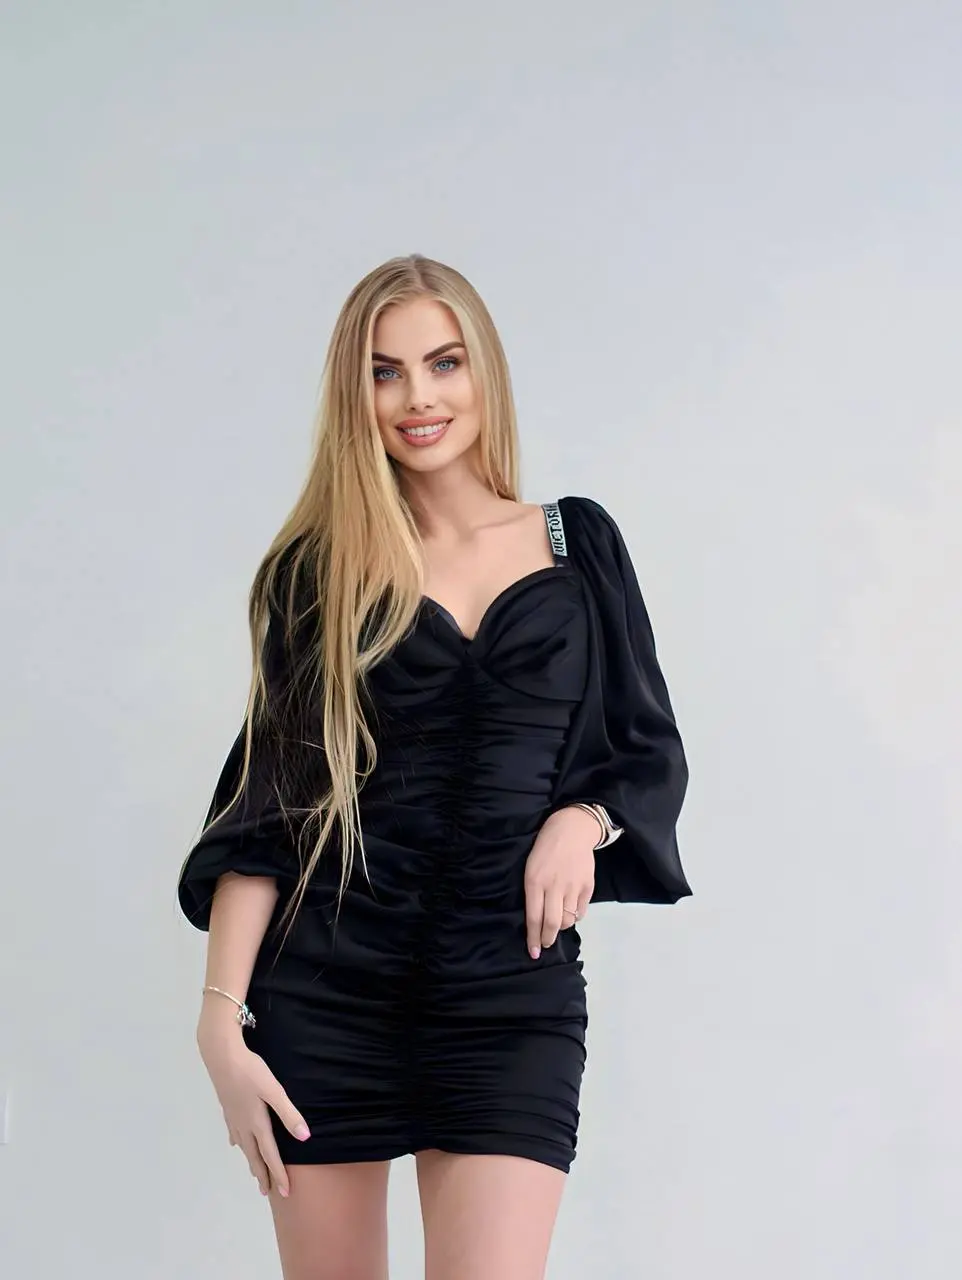 Polina ukrainian brides agency